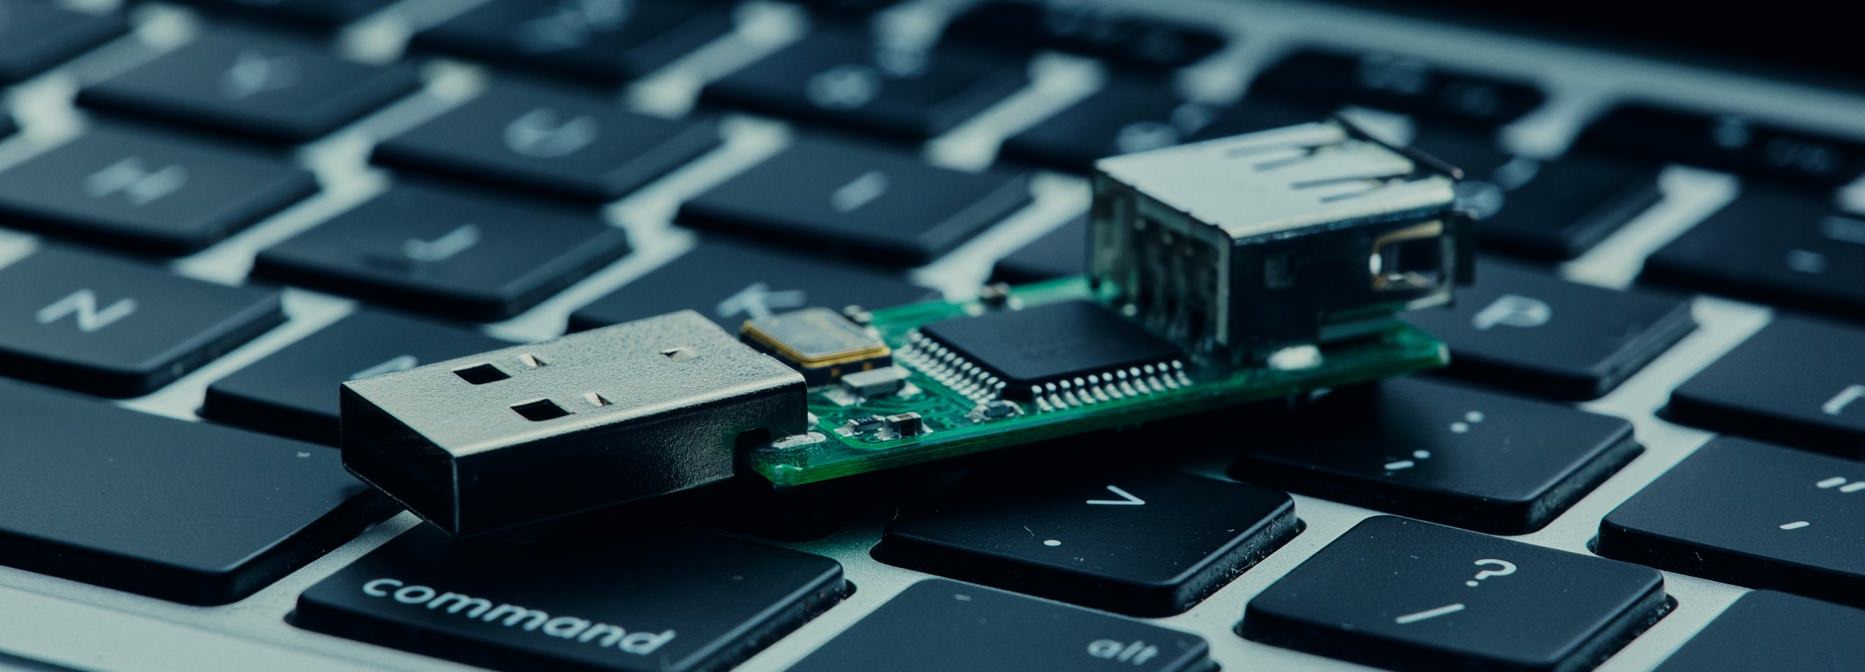 stakåndet Forbavselse enhed A USB keylogger to record keystrokes | Integra Sources